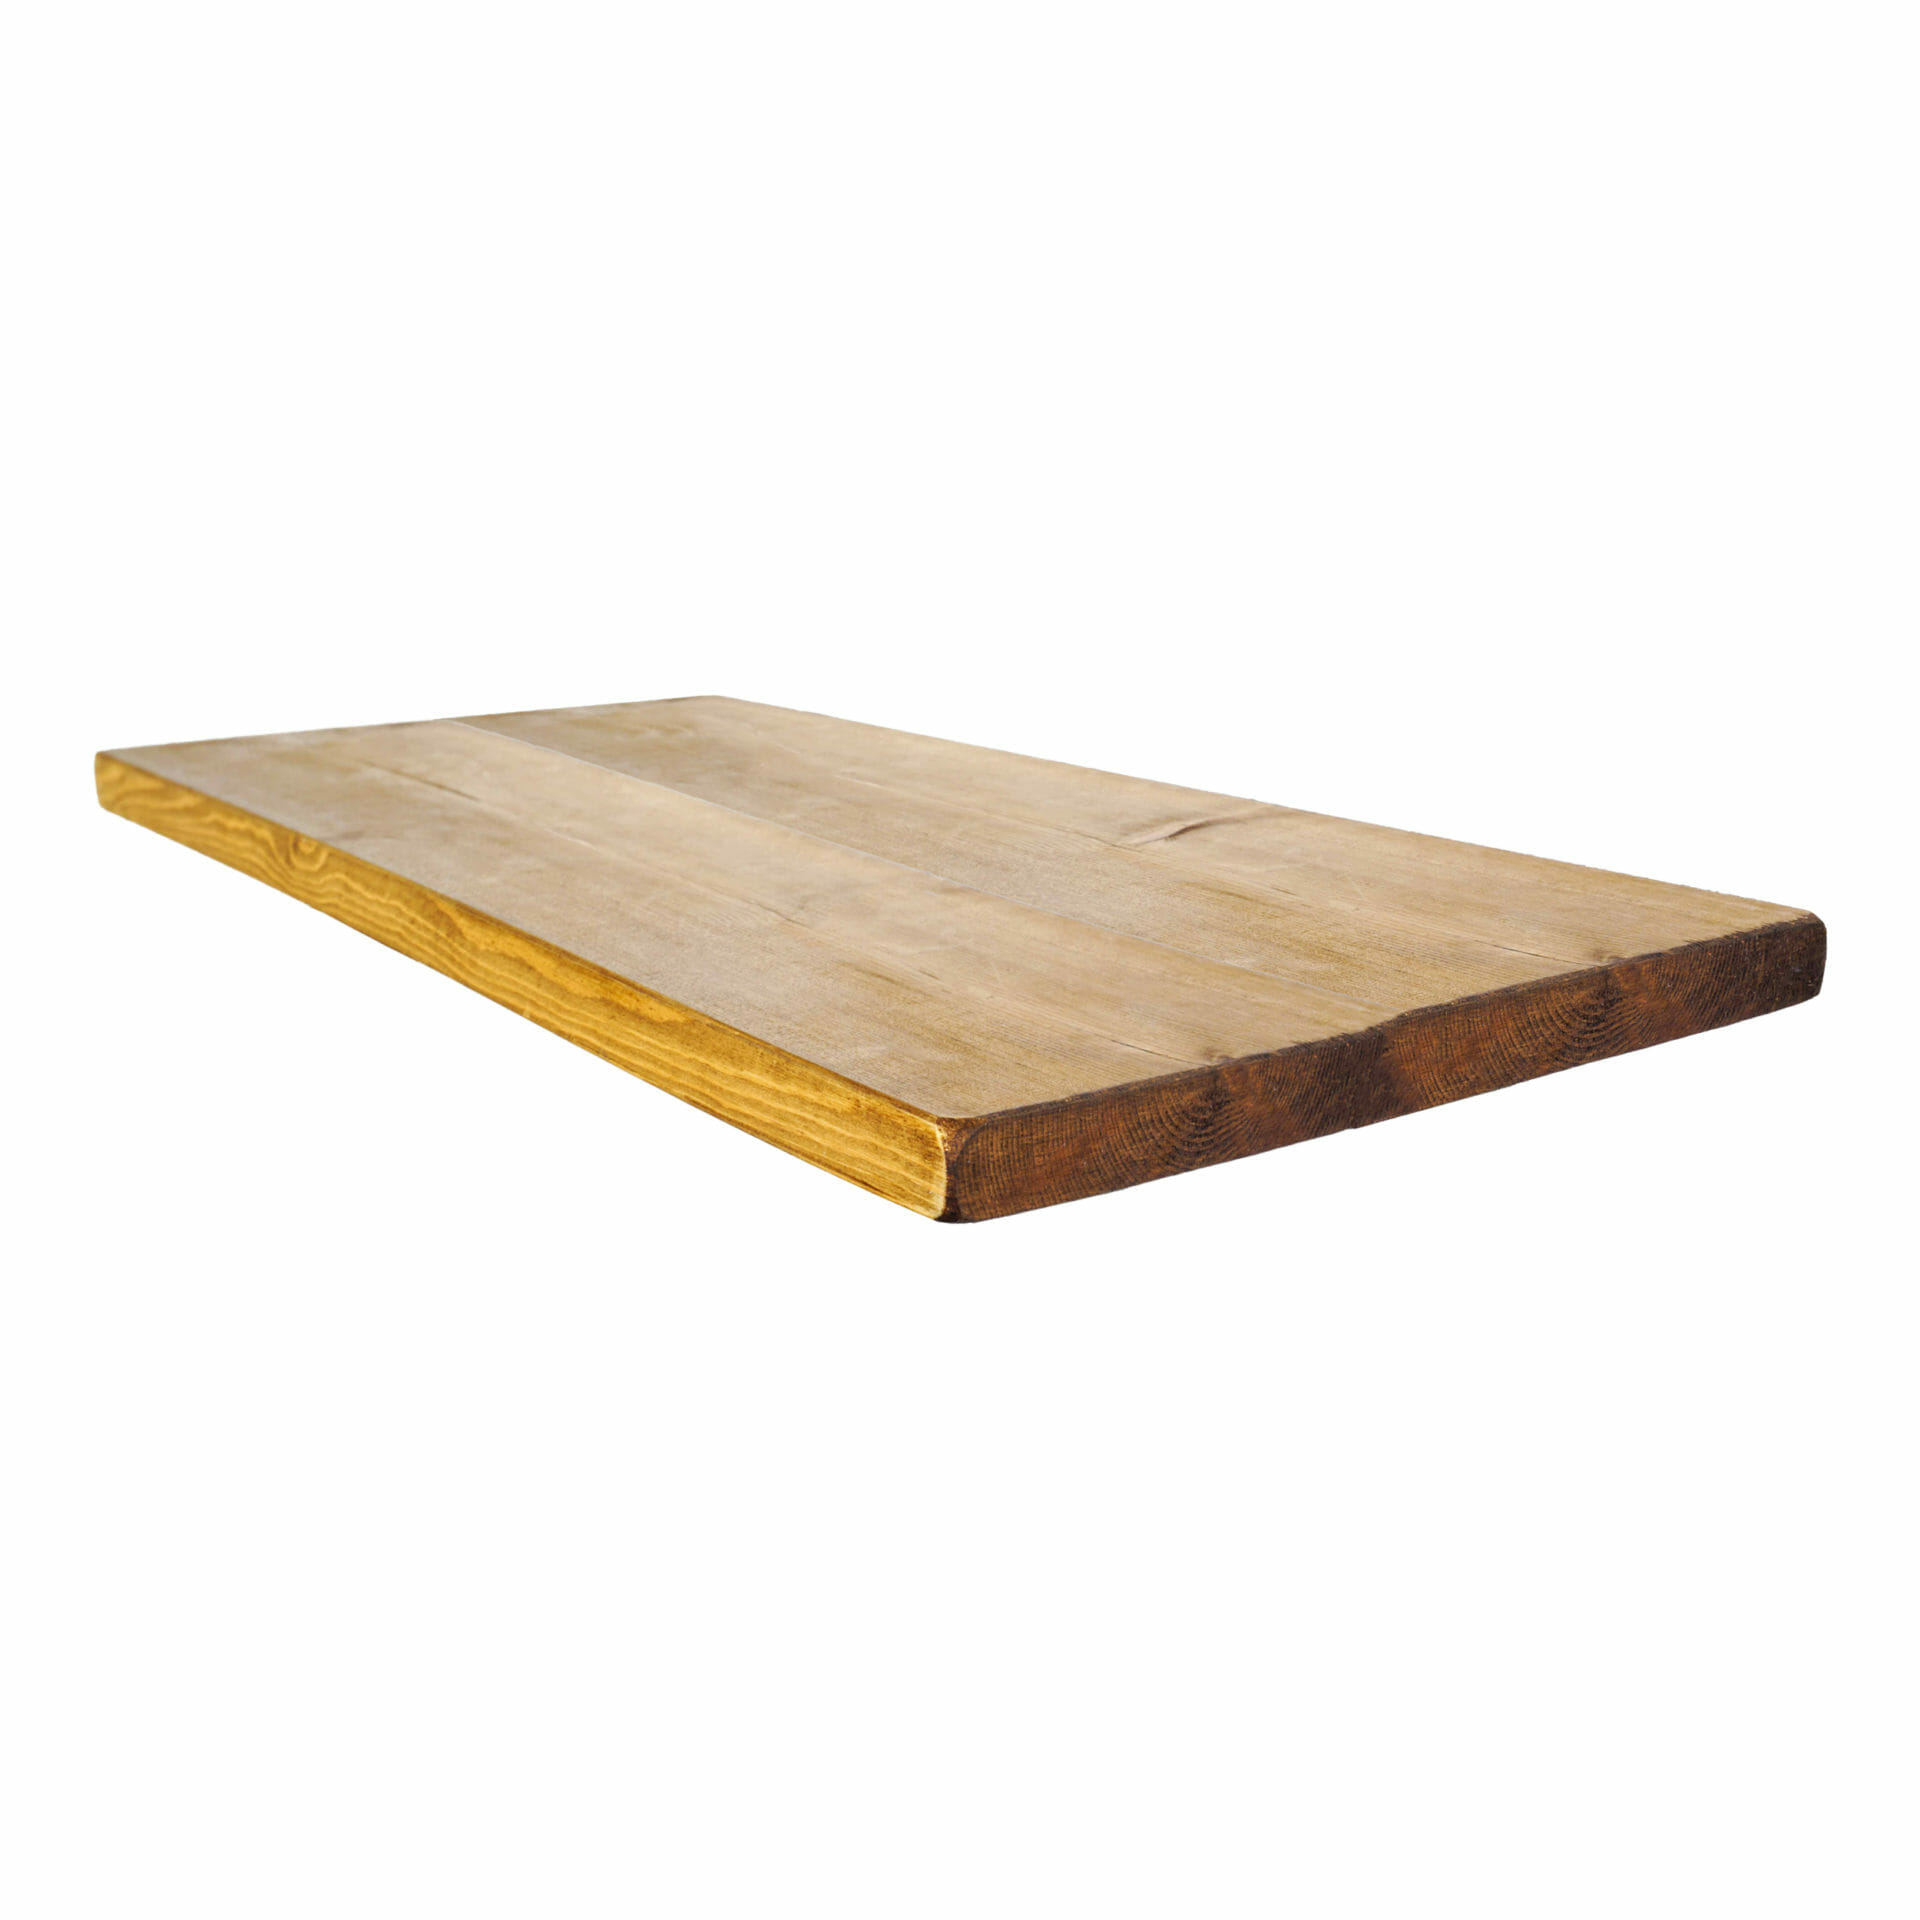 44cm-x-3cm-shelving-timber-medium-oak-wax-scaffold-board